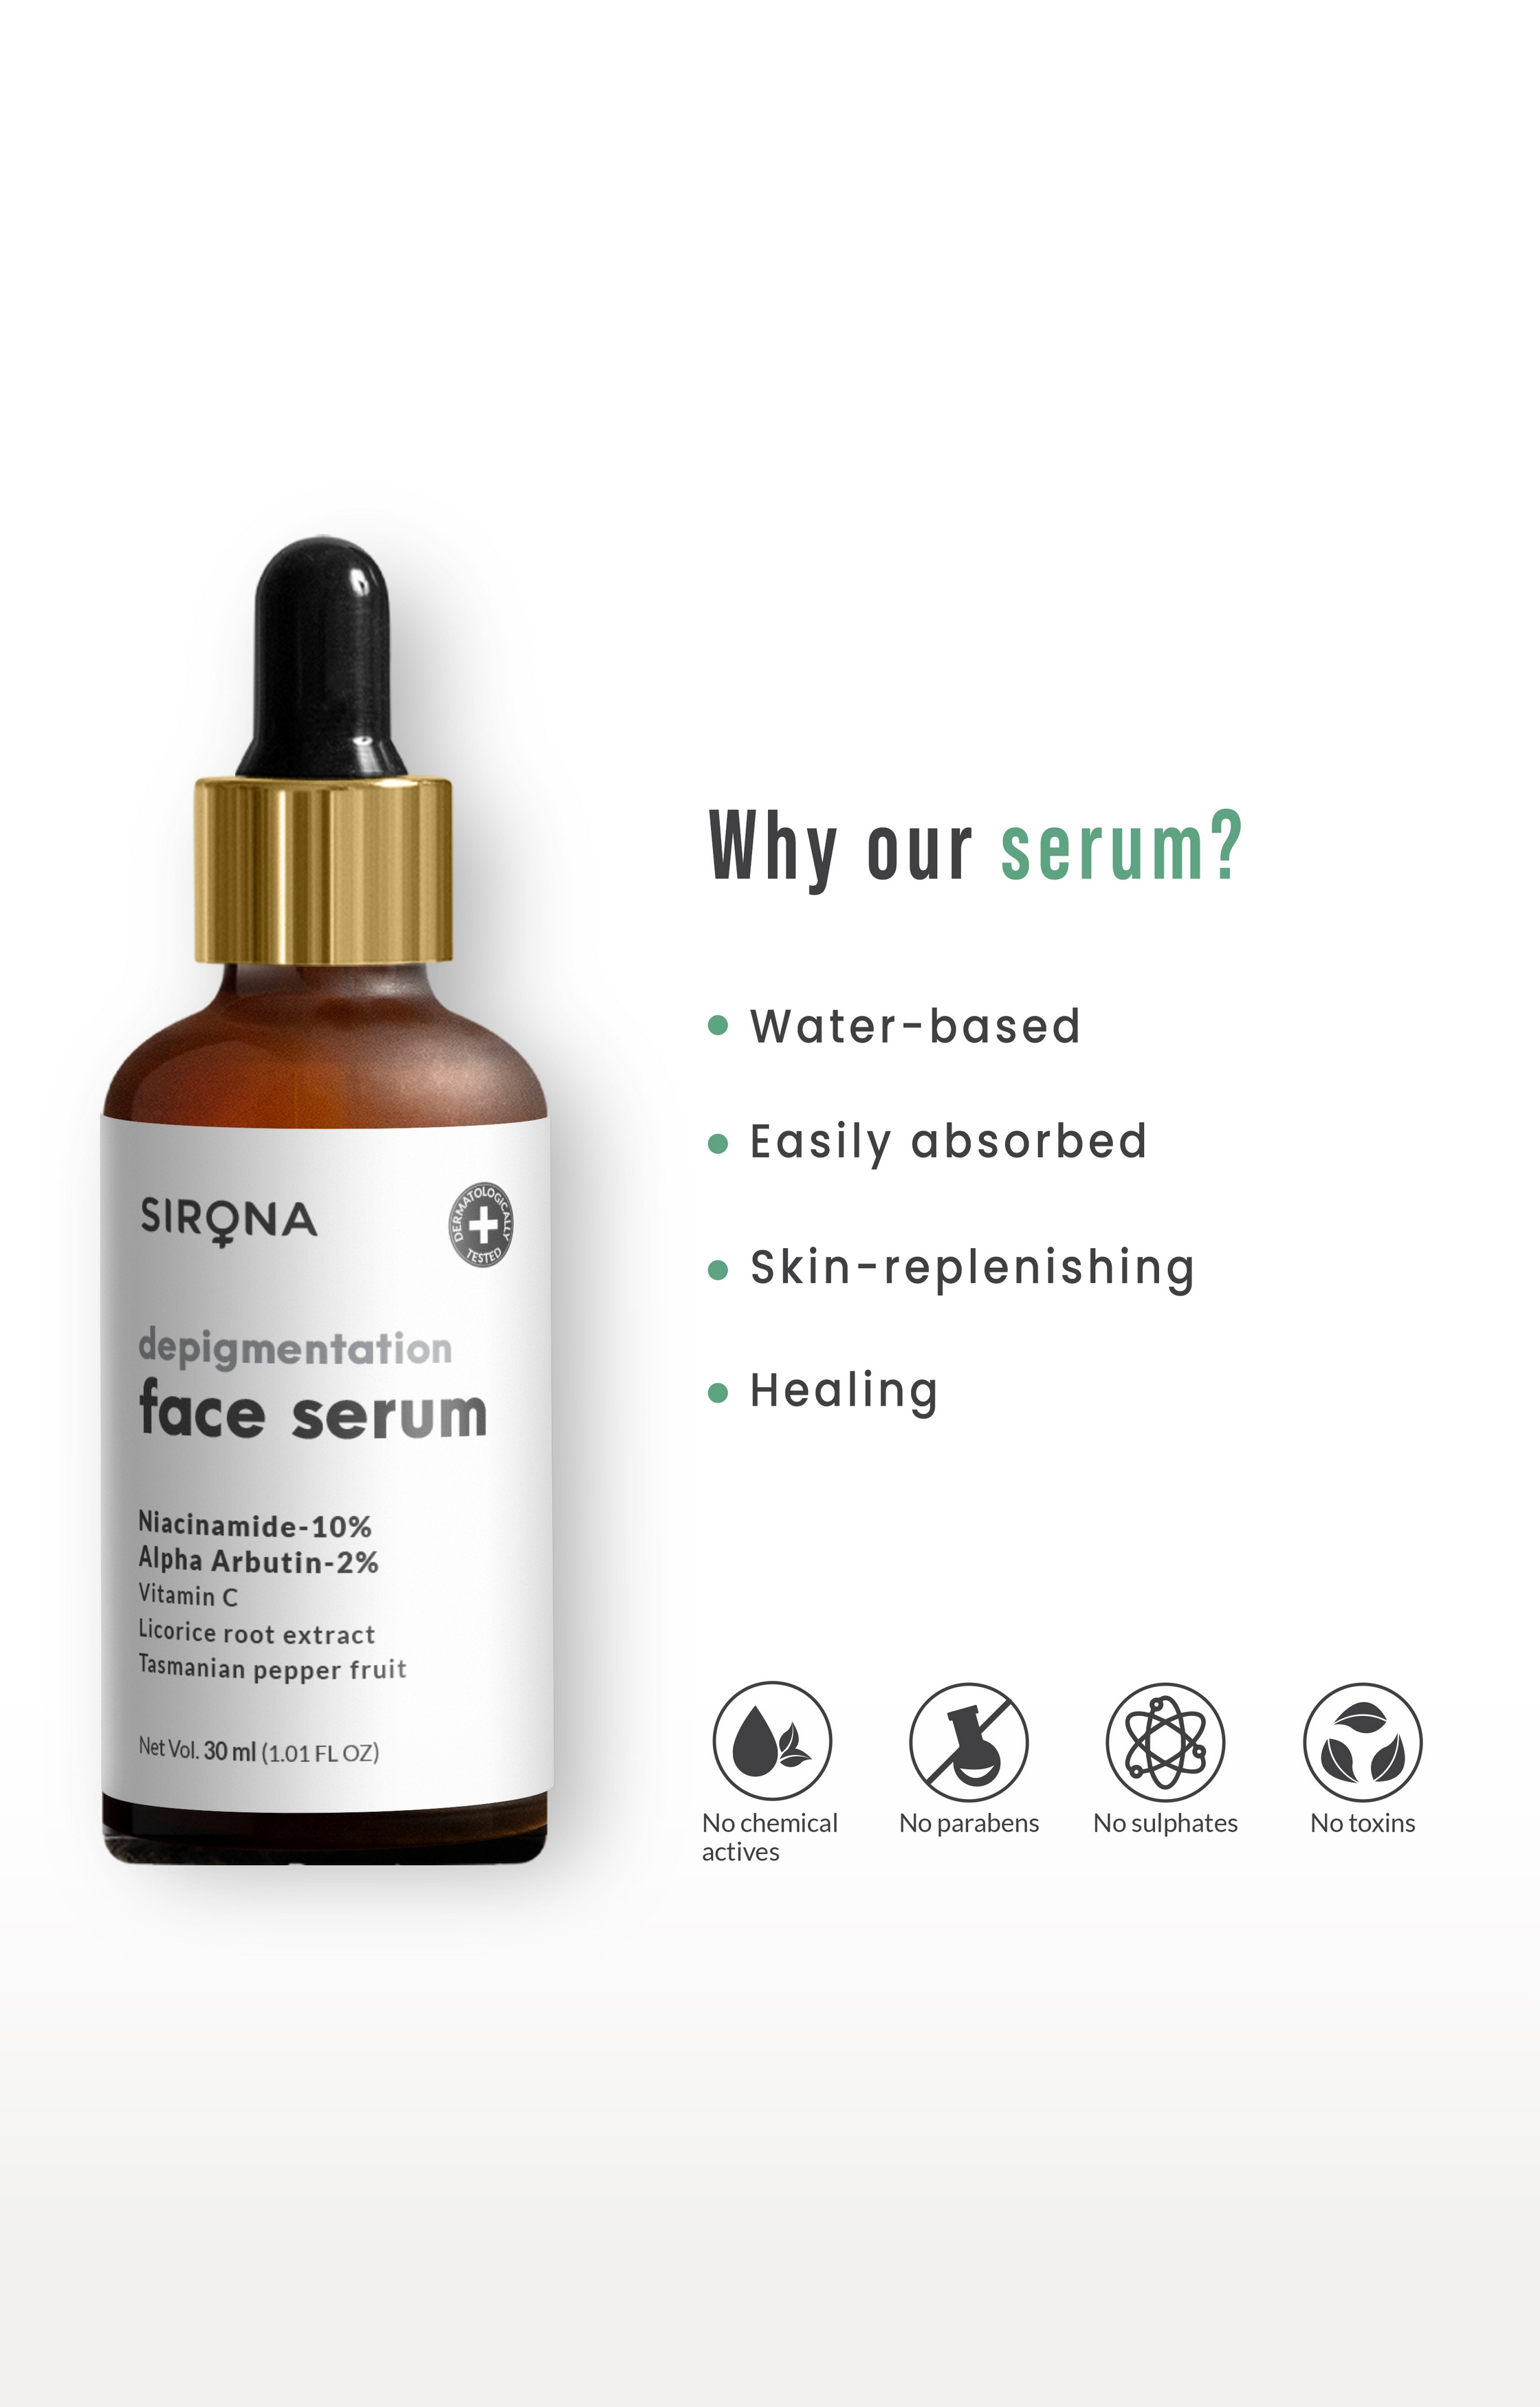 Sirona Depigmentation Face Serum - 30 Ml With Niacin amide, Vitamin C, Alpha Arbutin And Licorice Root Extract